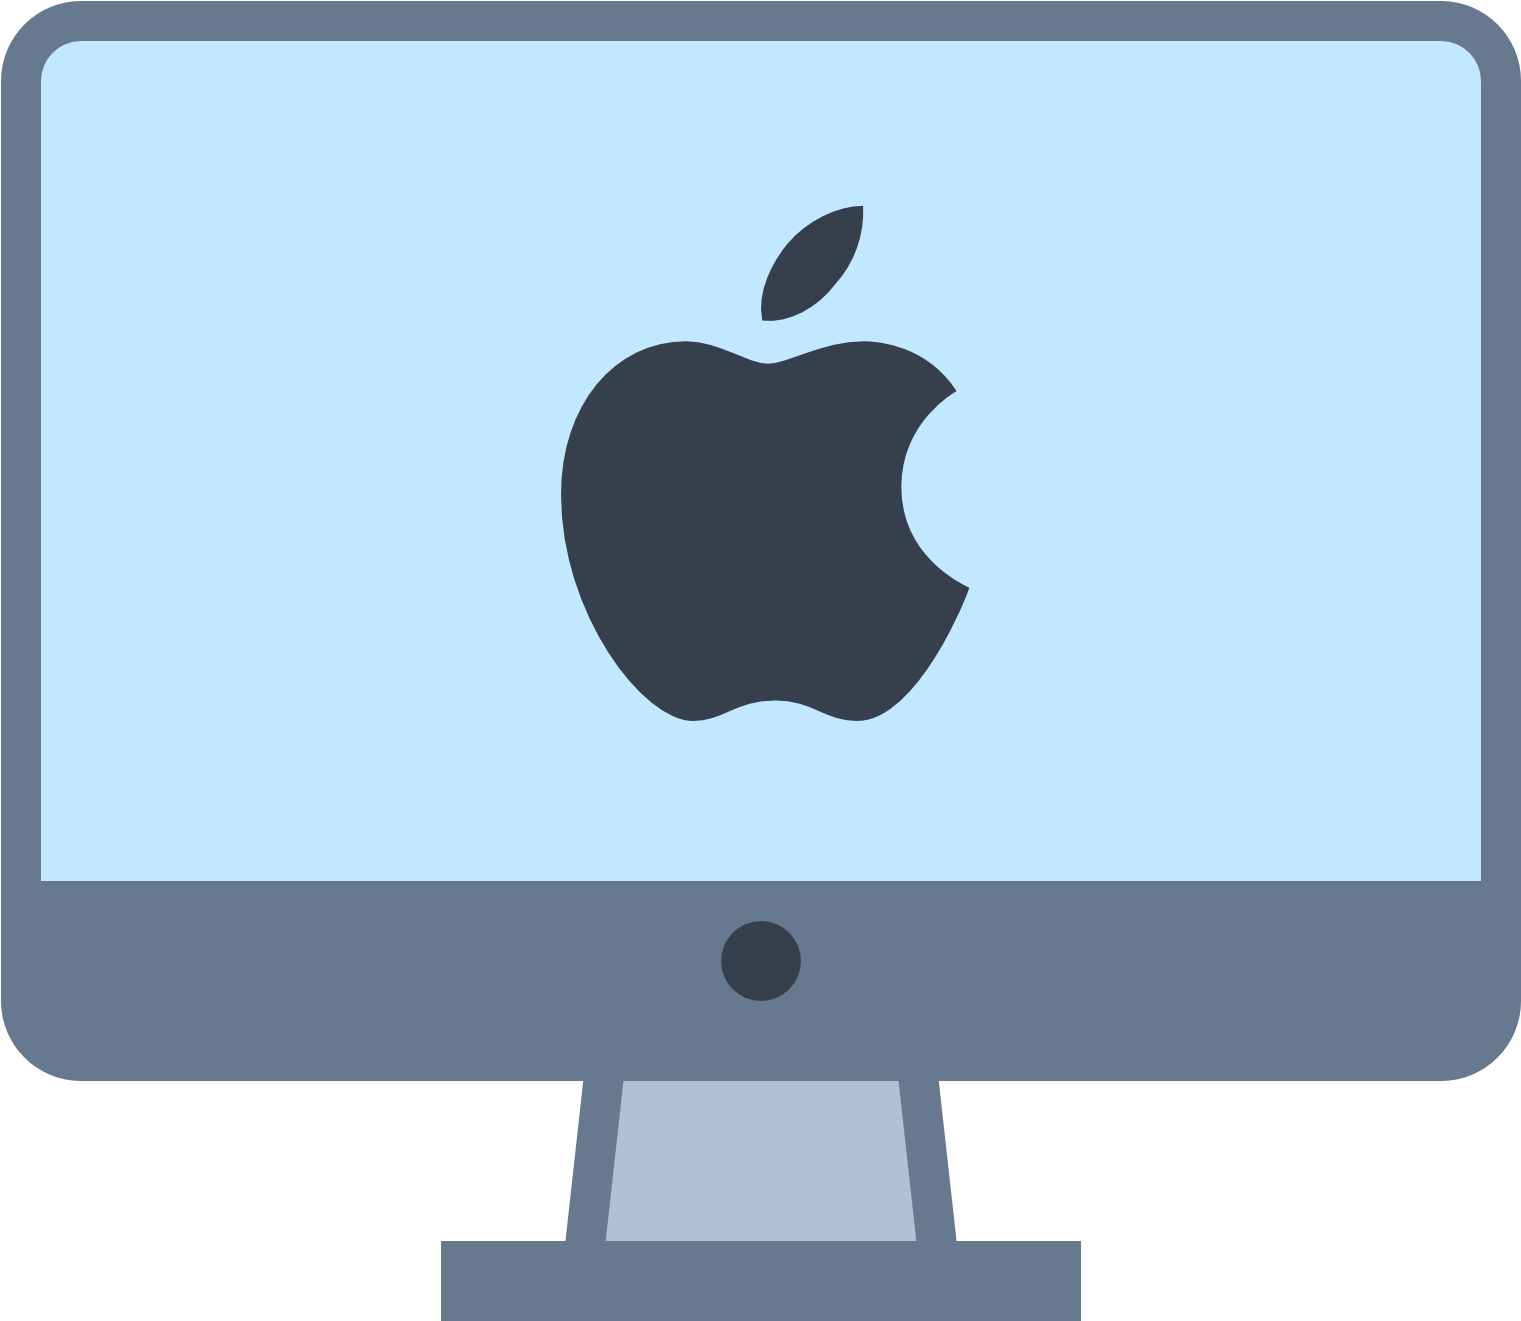 Applei Mac Icon Illustration PNG image